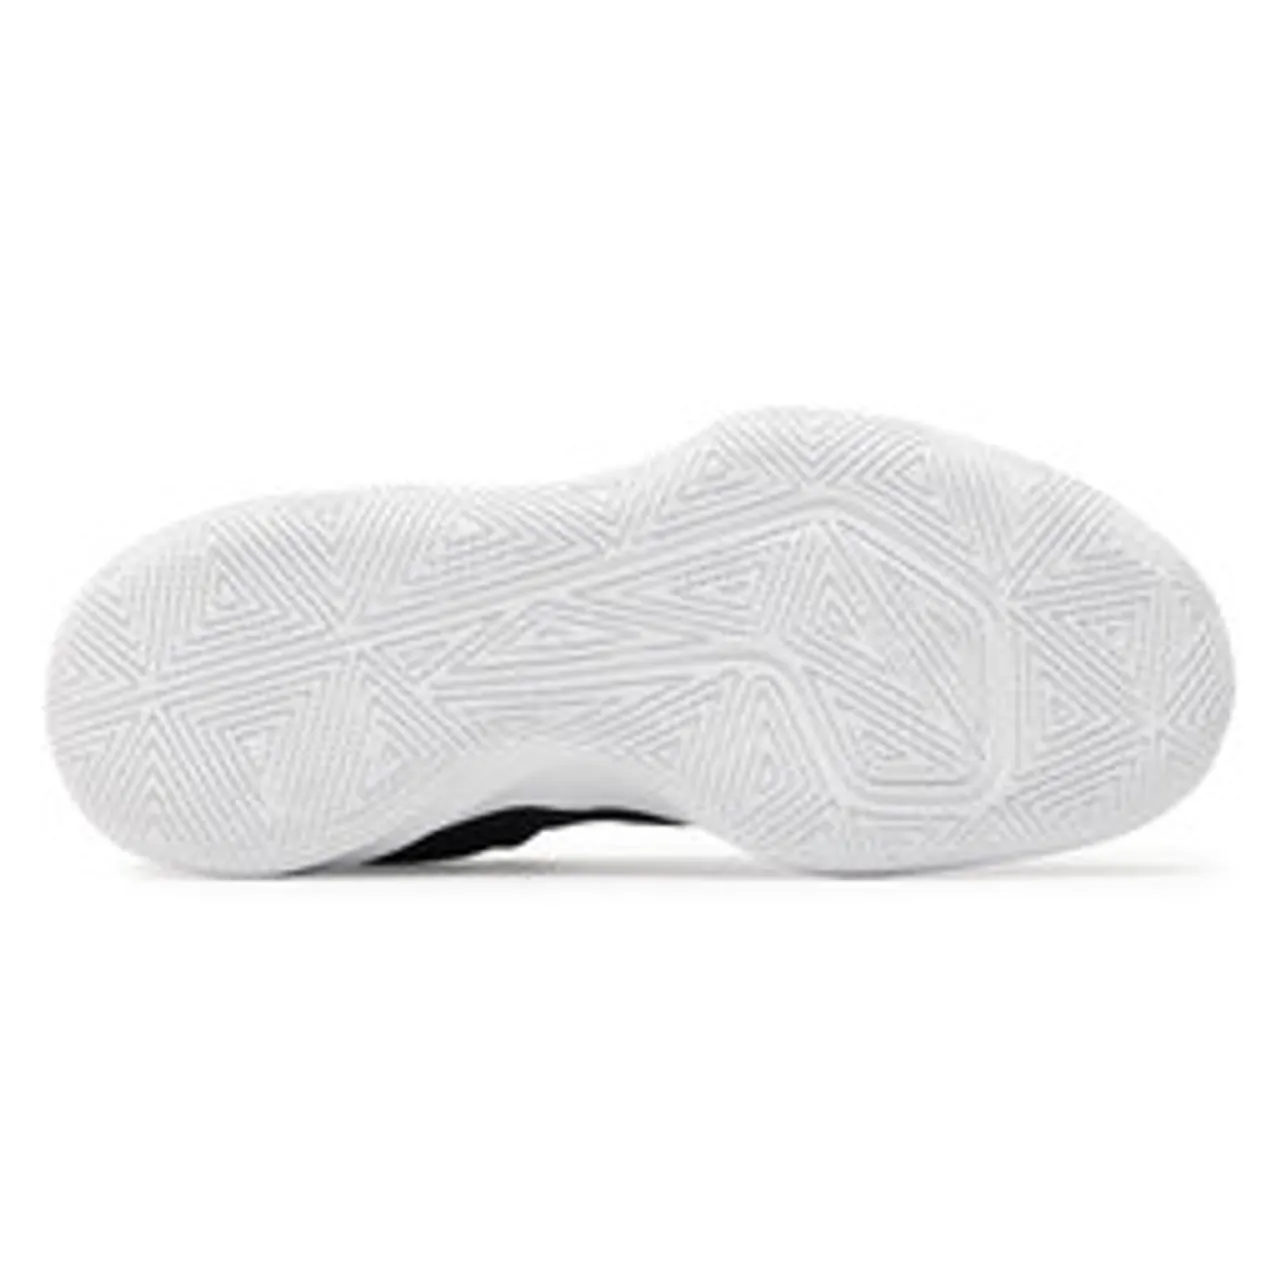 Schuhe Nike Zoom Hyperspeed Court CI2964 010 Black/White